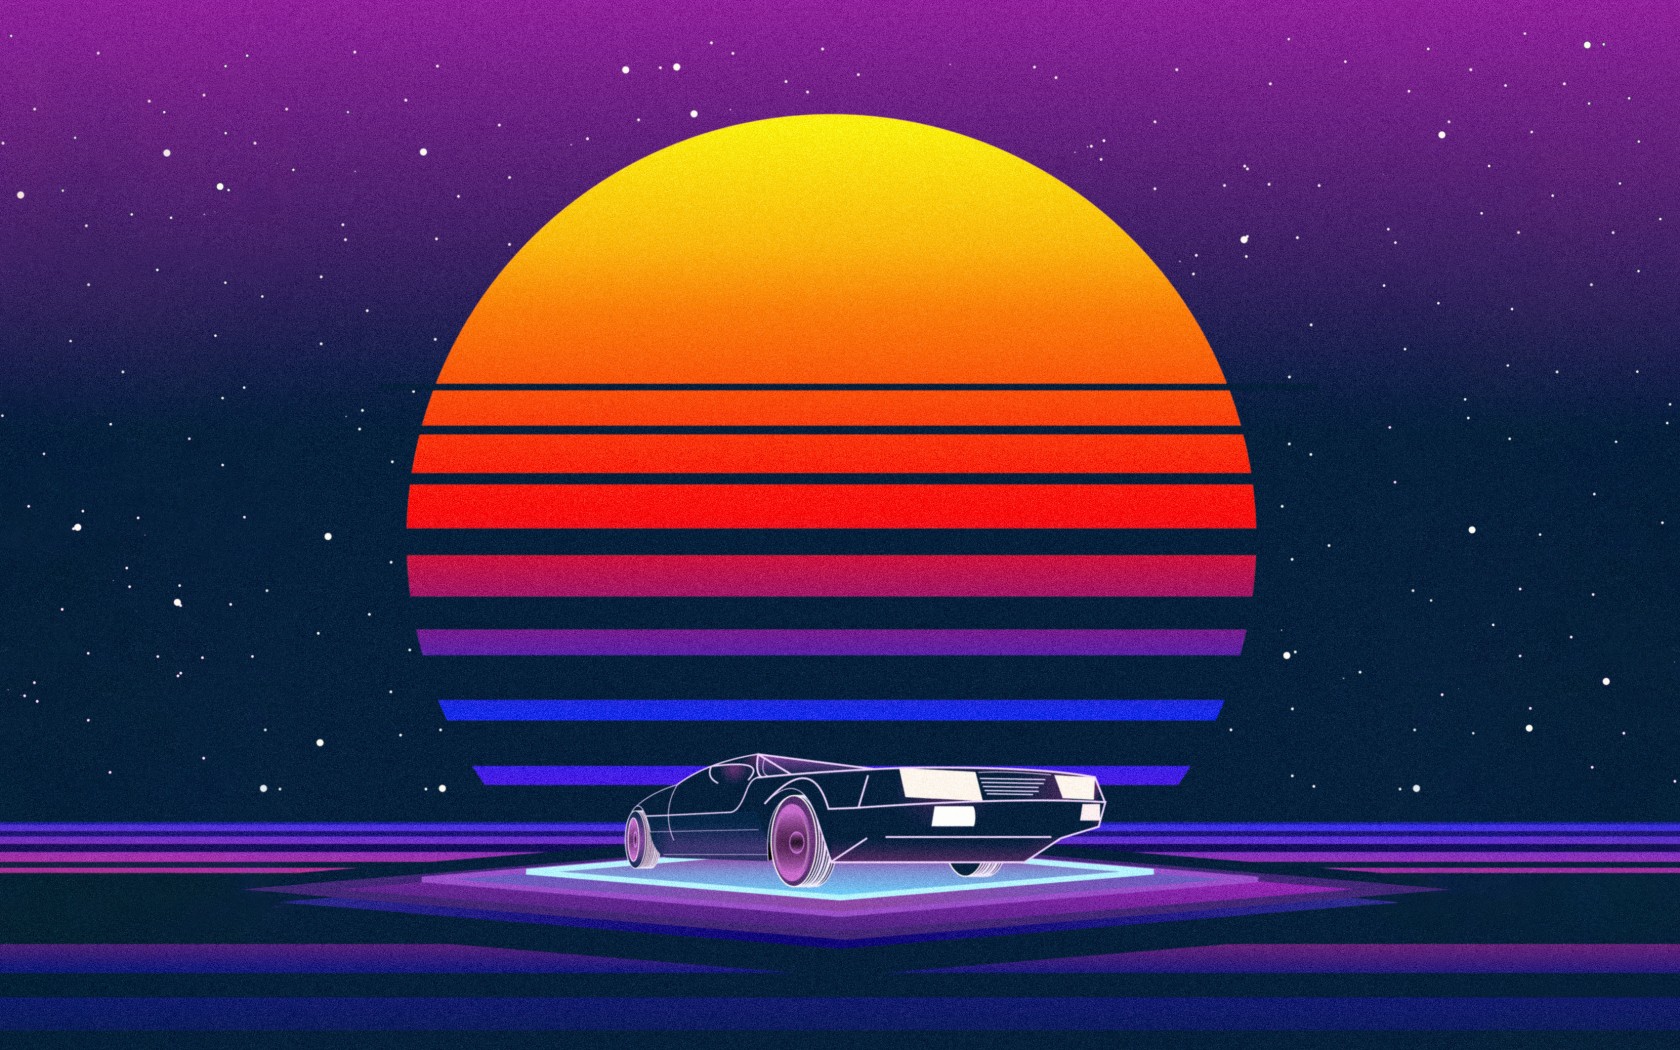 80s style wallpaper,light,purple,sky,space,vehicle